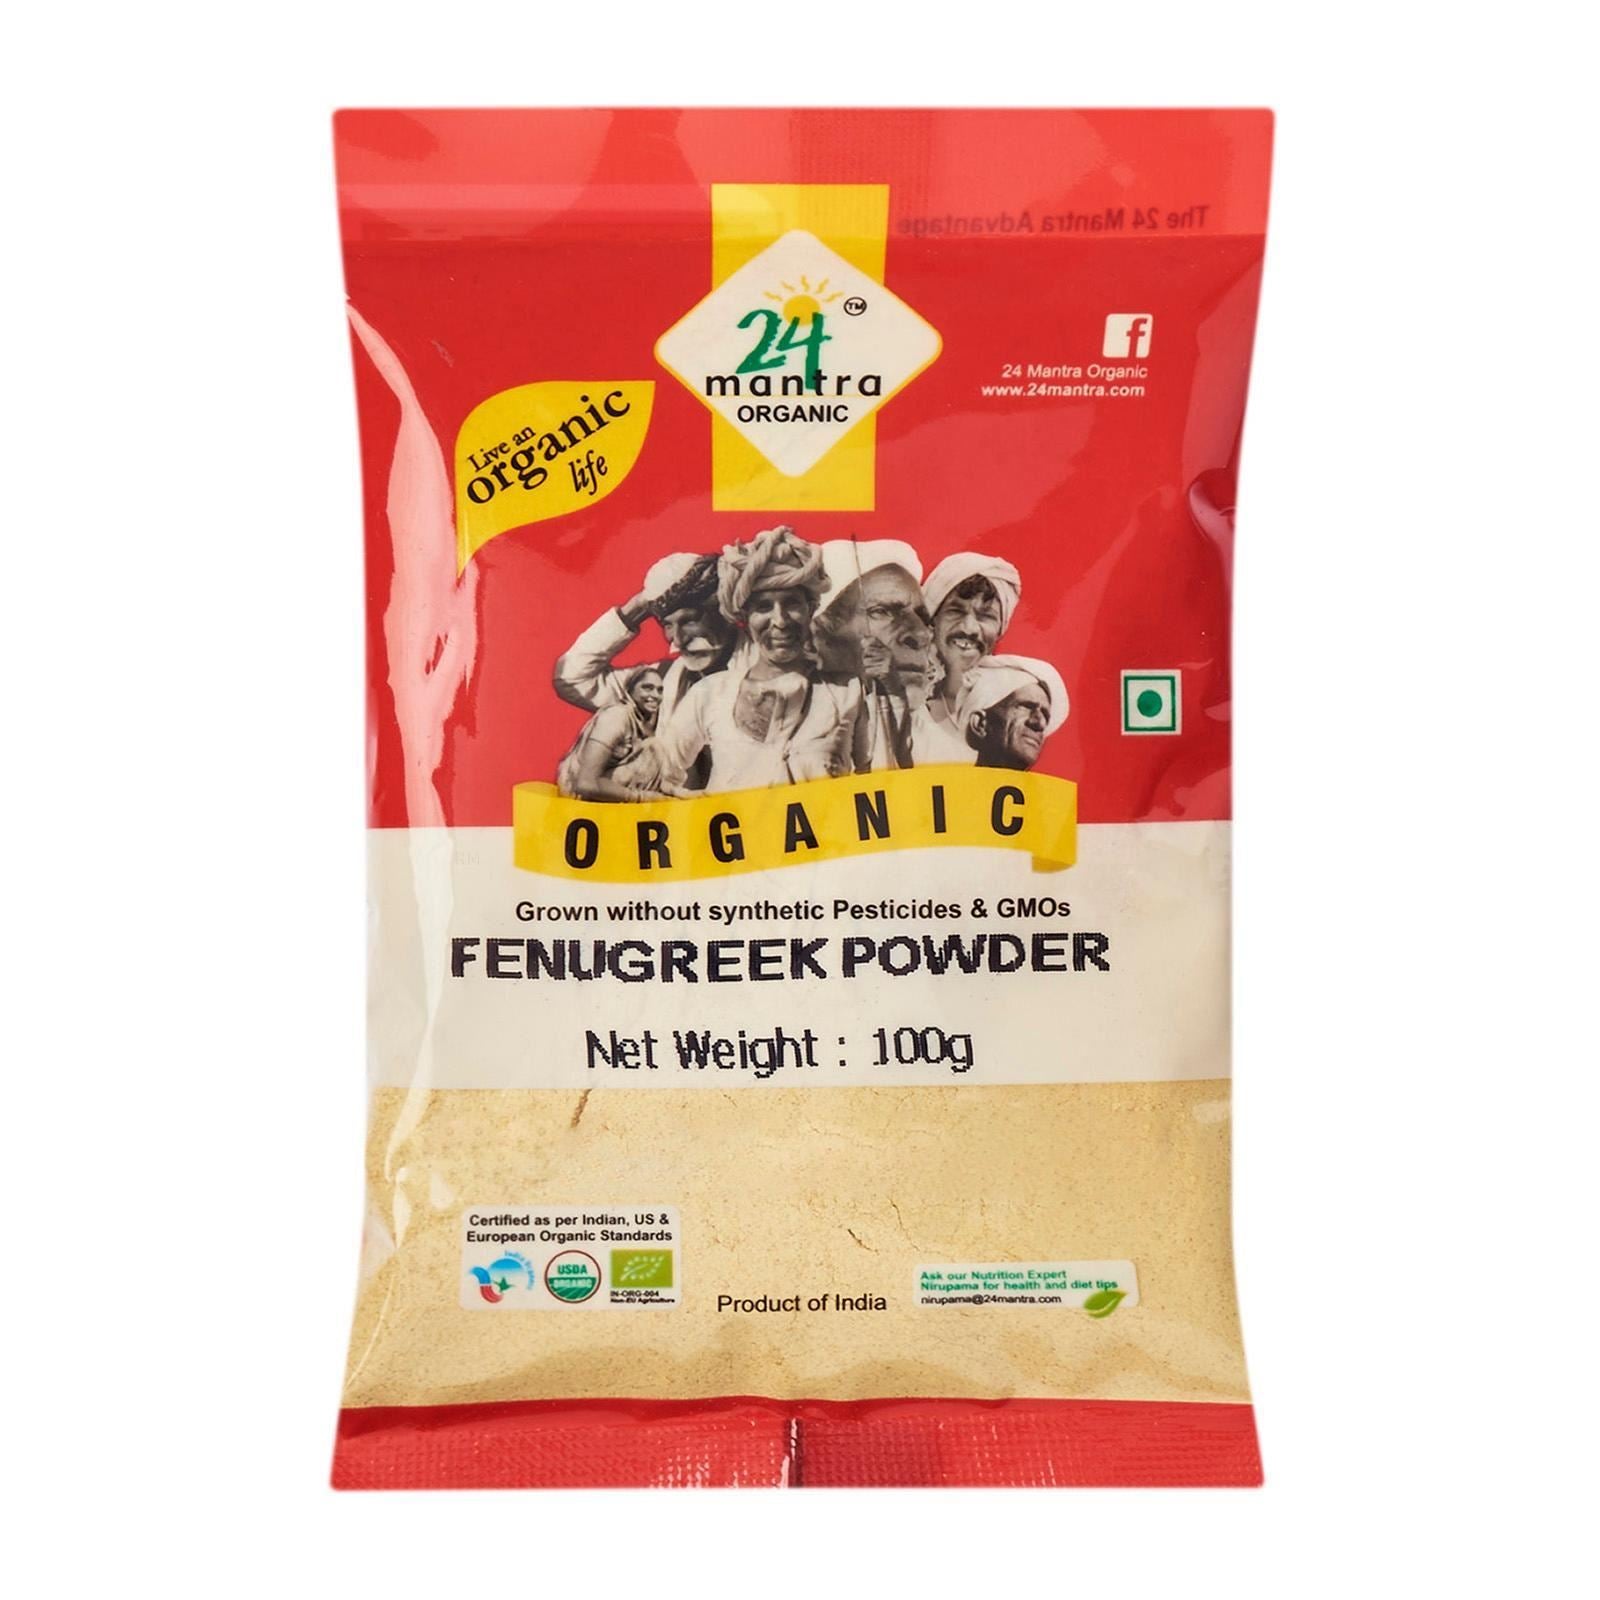 24 MANTRA Fenugreek Powder  (Certified ORGANIC)